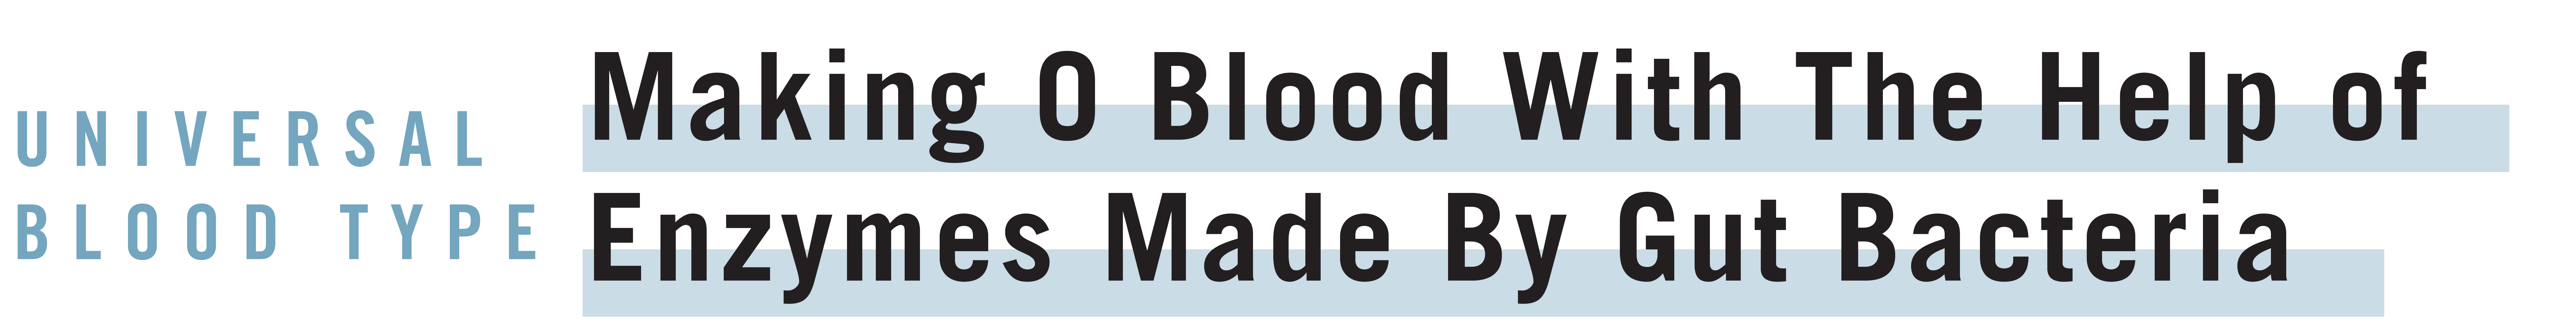 Universal blood Type